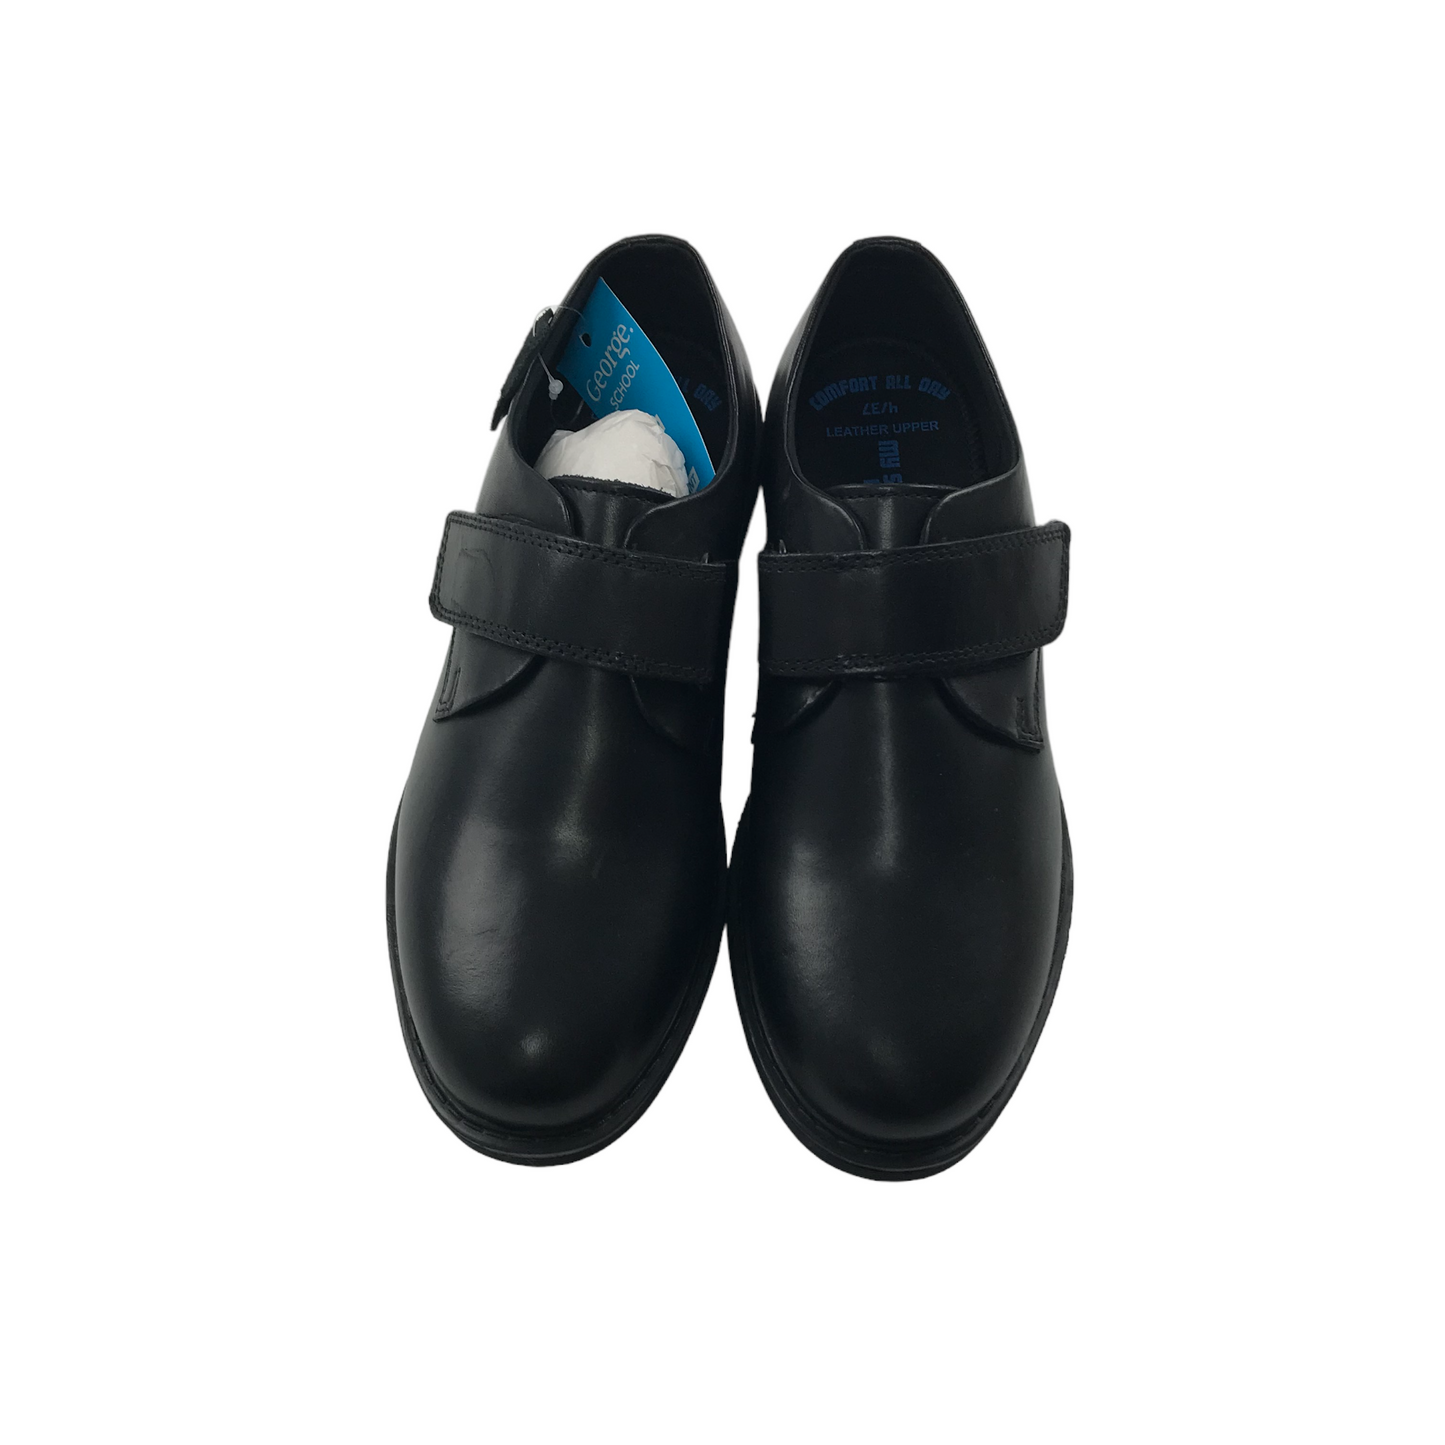 George Black Leather School Shoes Shoe Size 4